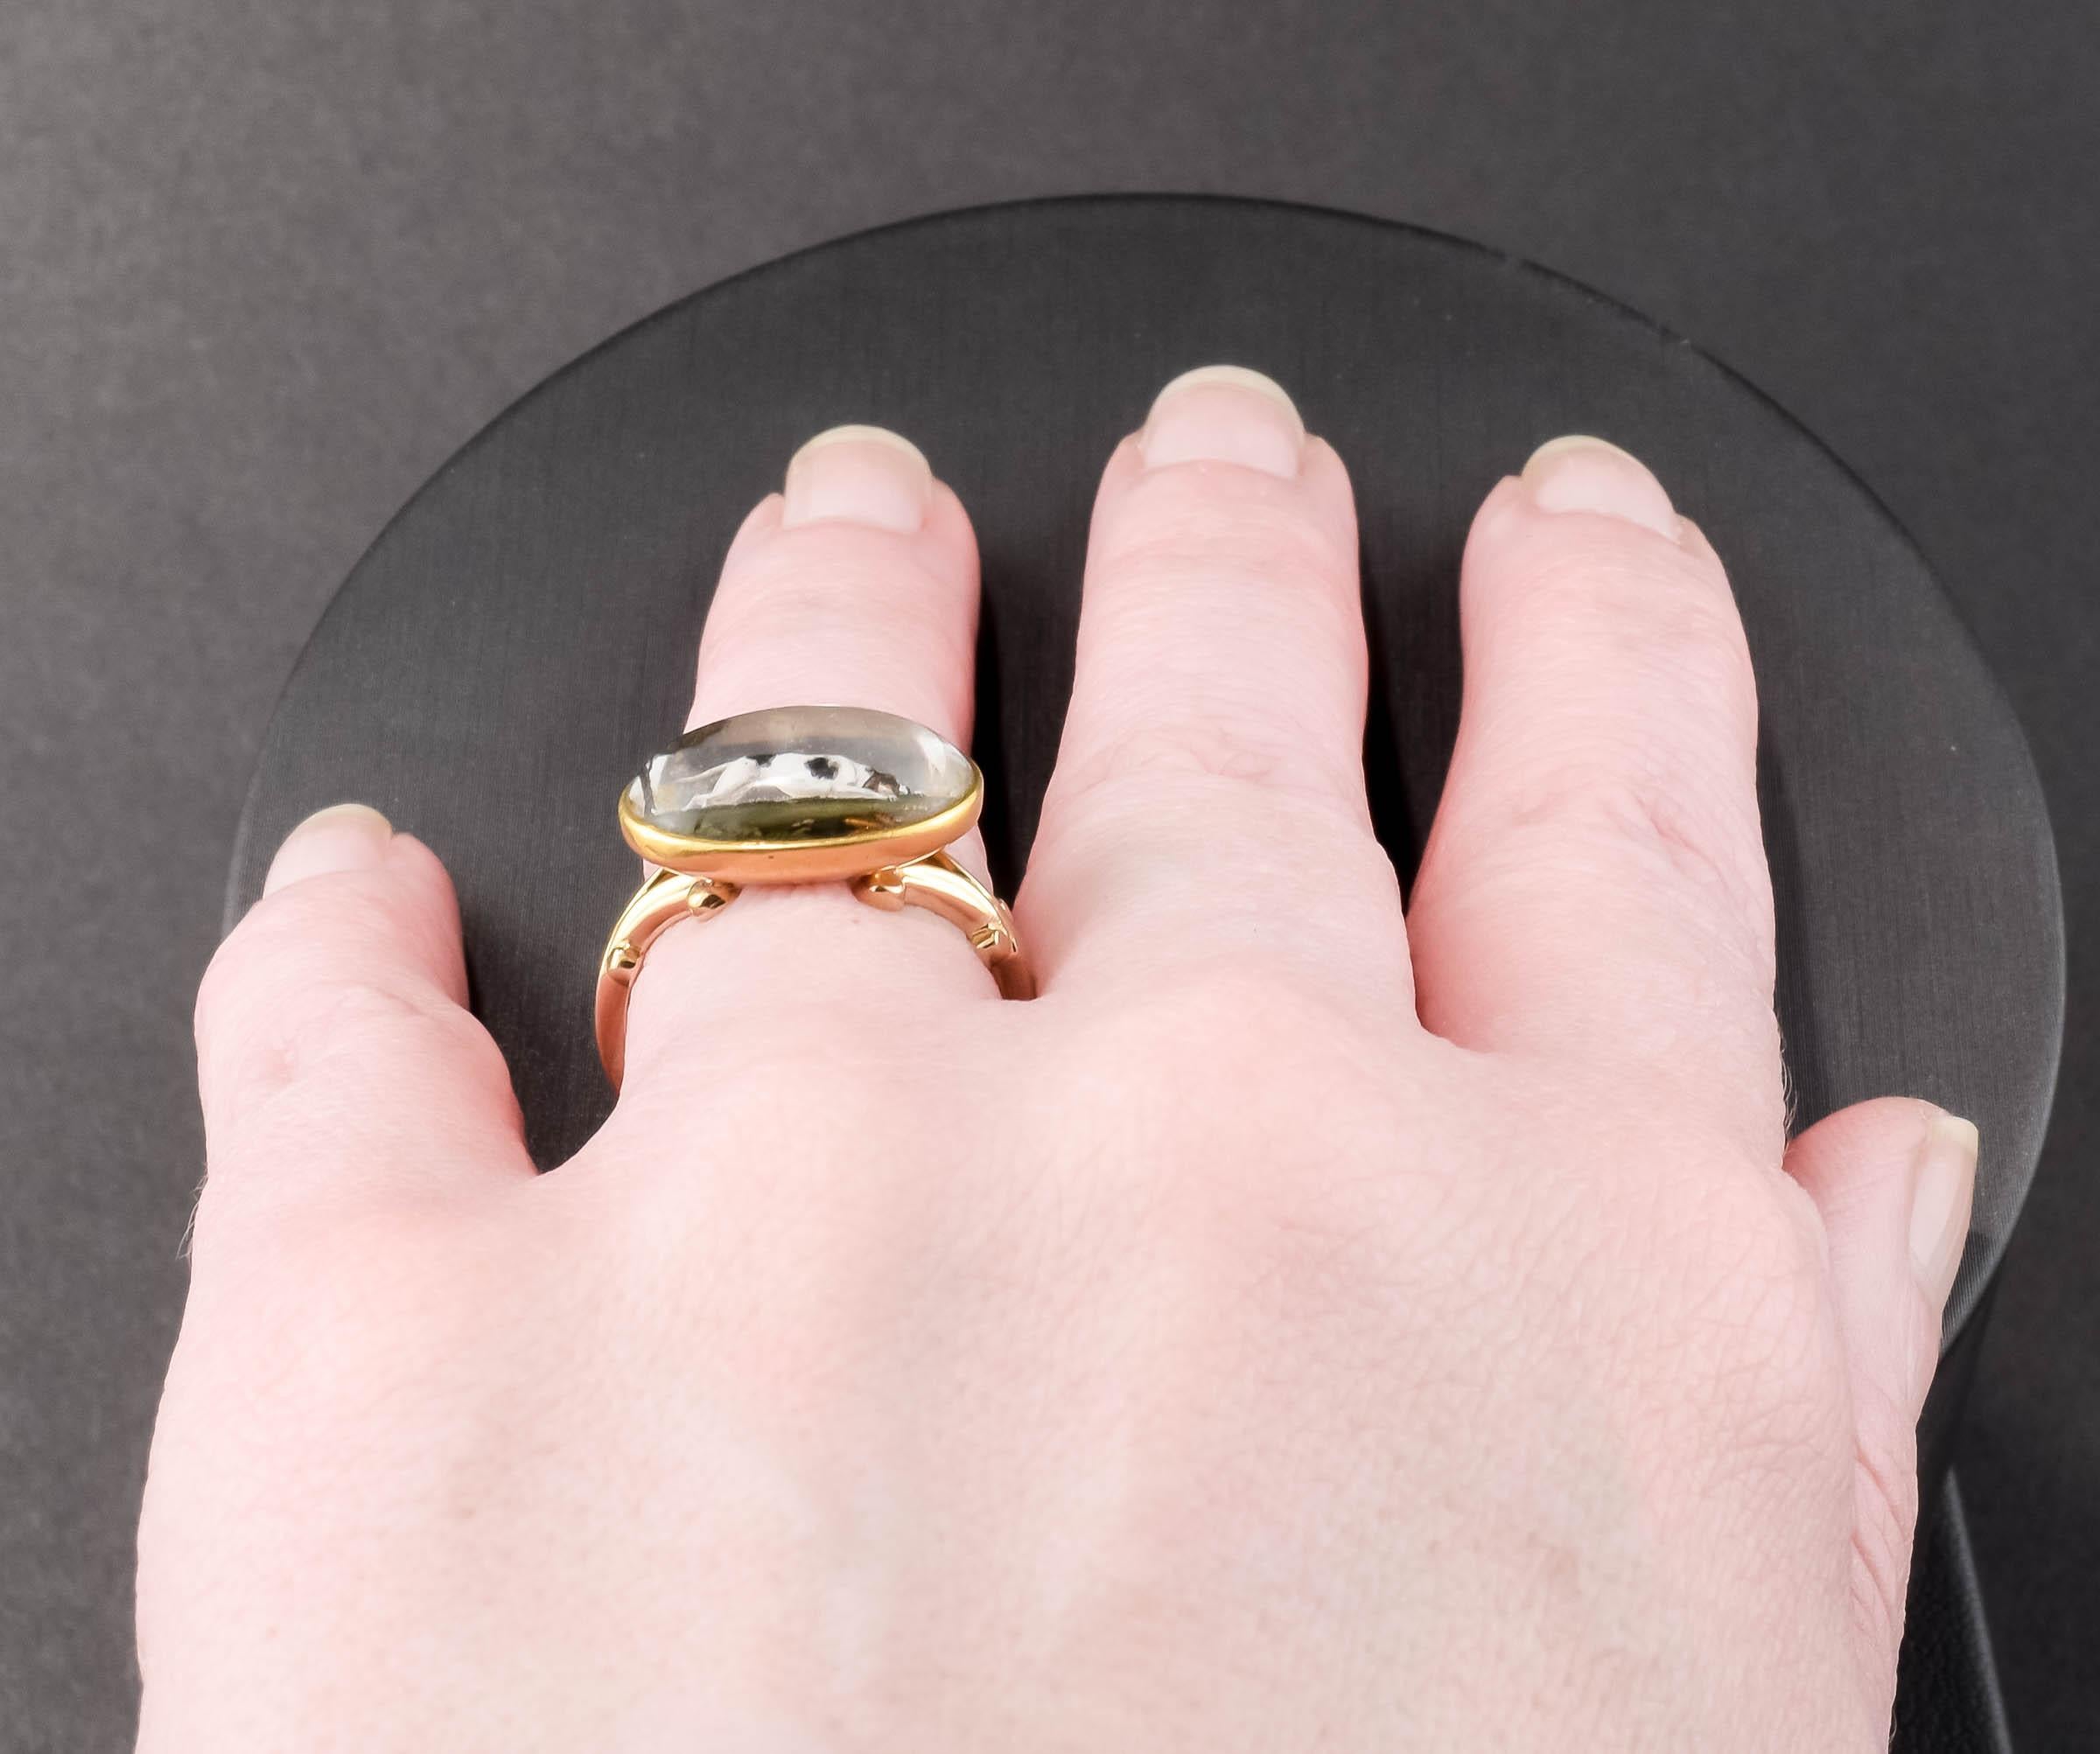 Essex Crystal Running Dog Hound Ring in 18K & 14K Gold - Antique Conversion #1 1